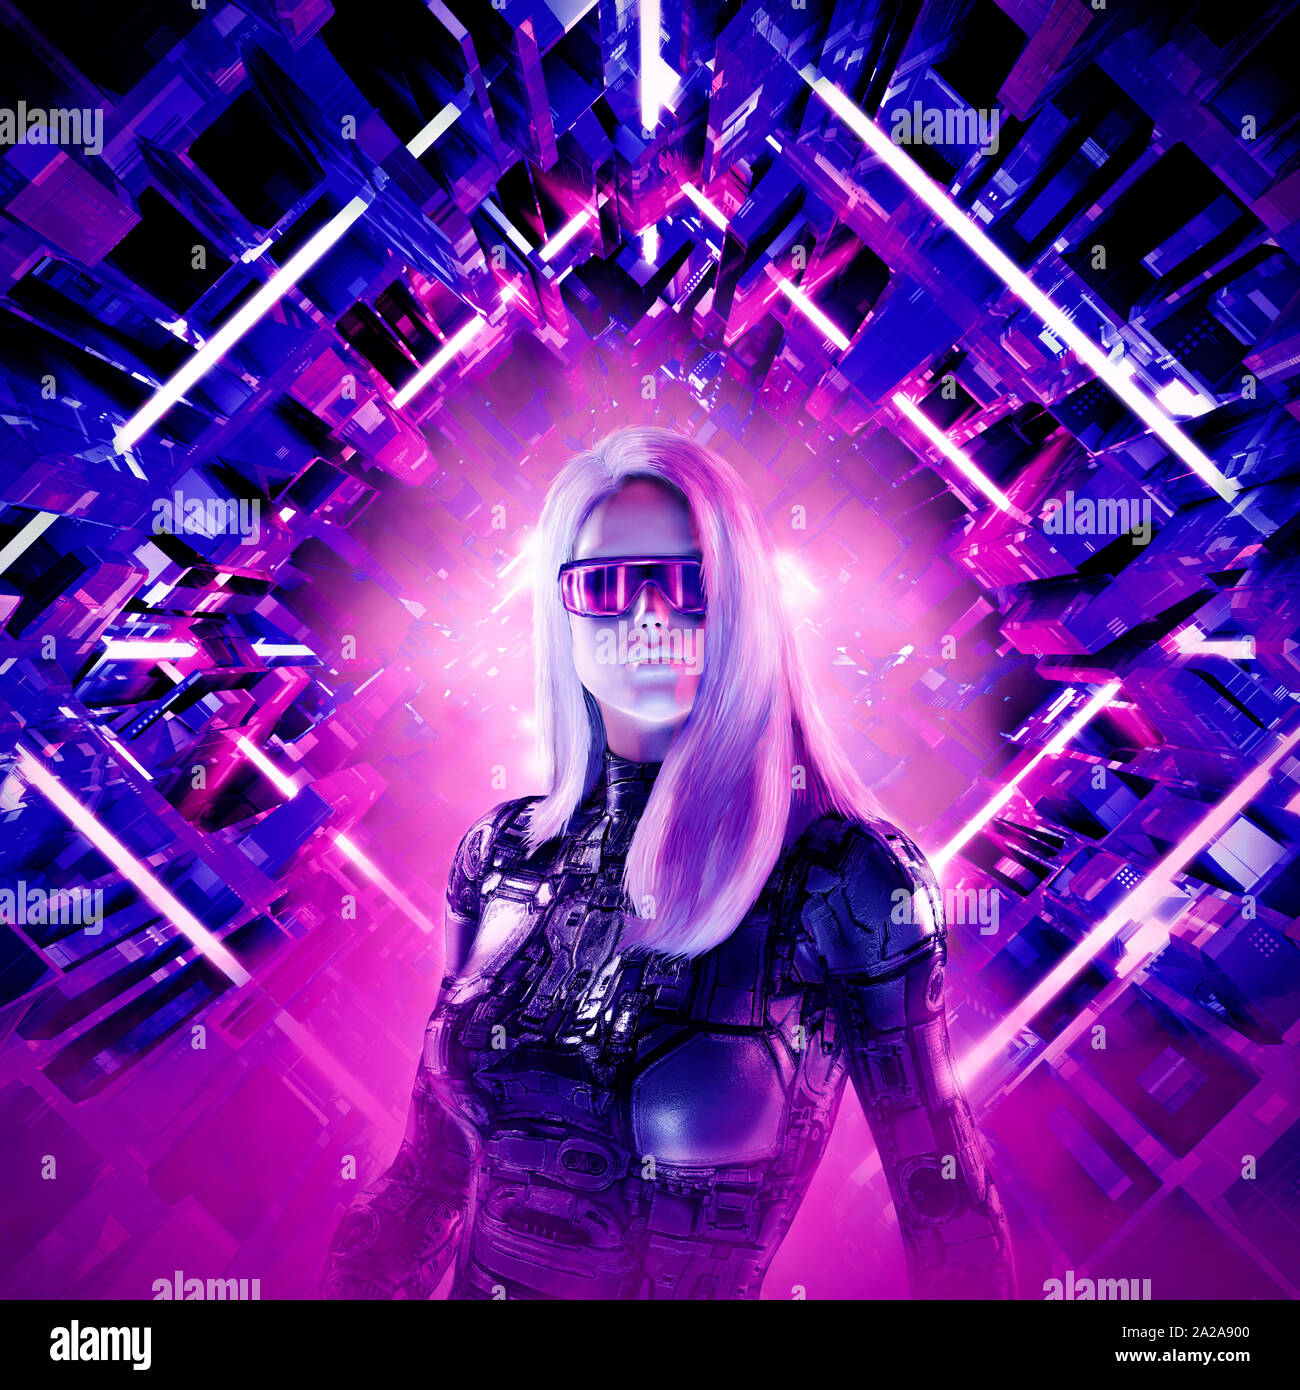 Cyberpunk female heroine / 3D illustration of beautiful blond woman with sunglasses in futuristic neon lit corridor Stock Photo